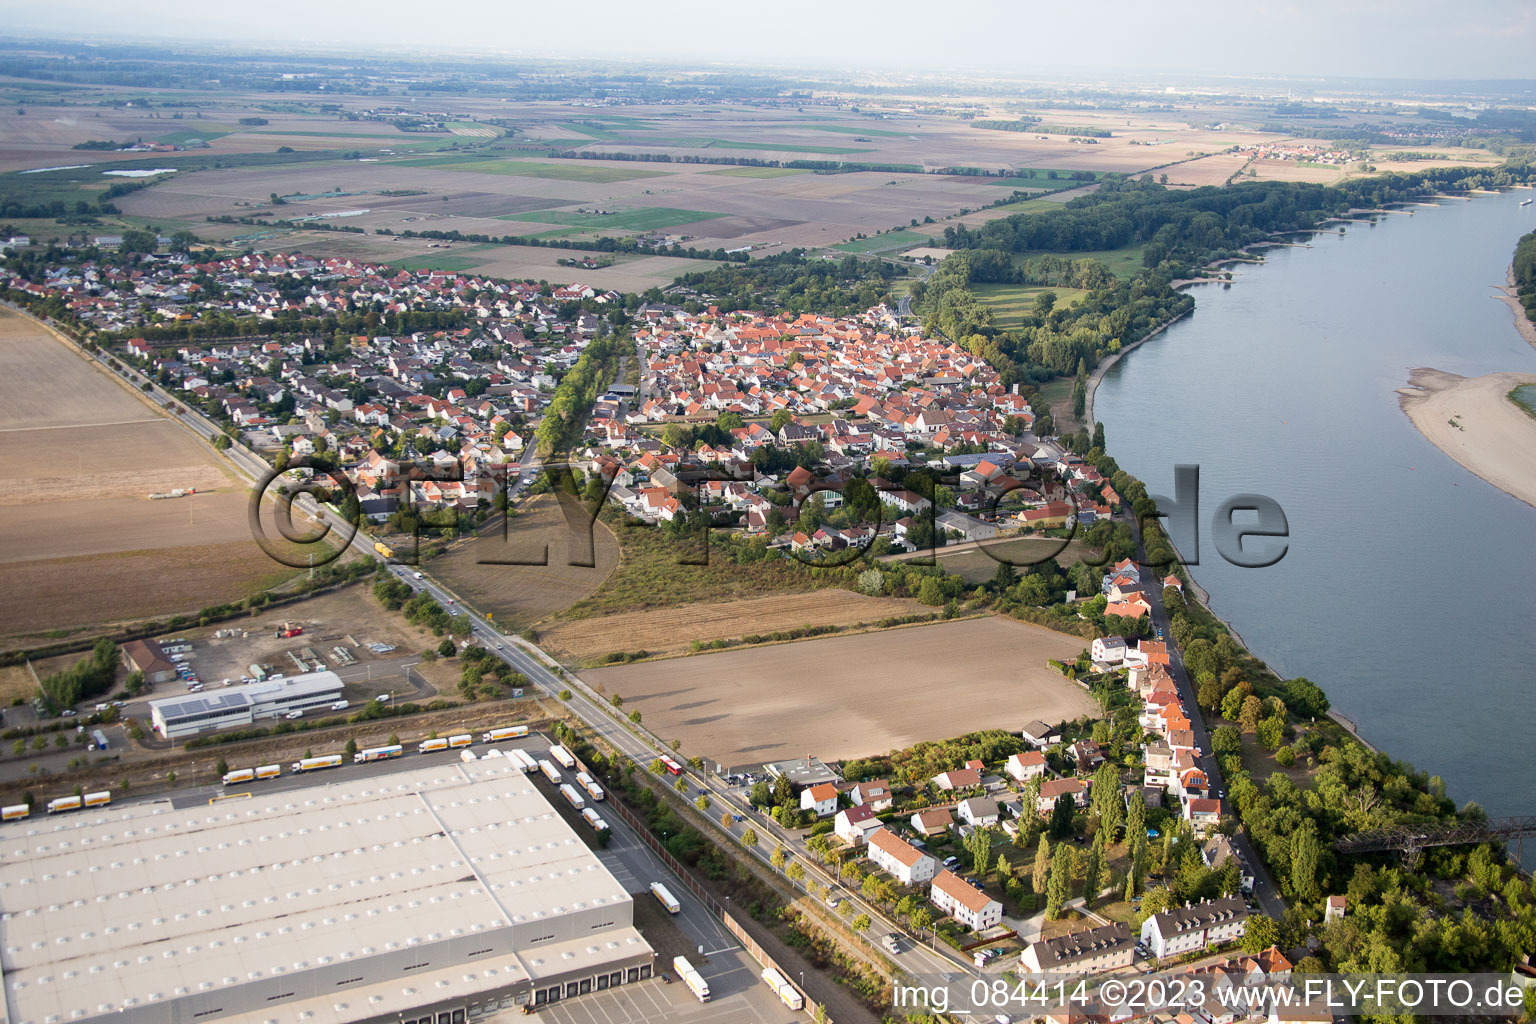 District Rheindürkheim in Worms in the state Rhineland-Palatinate, Germany from above